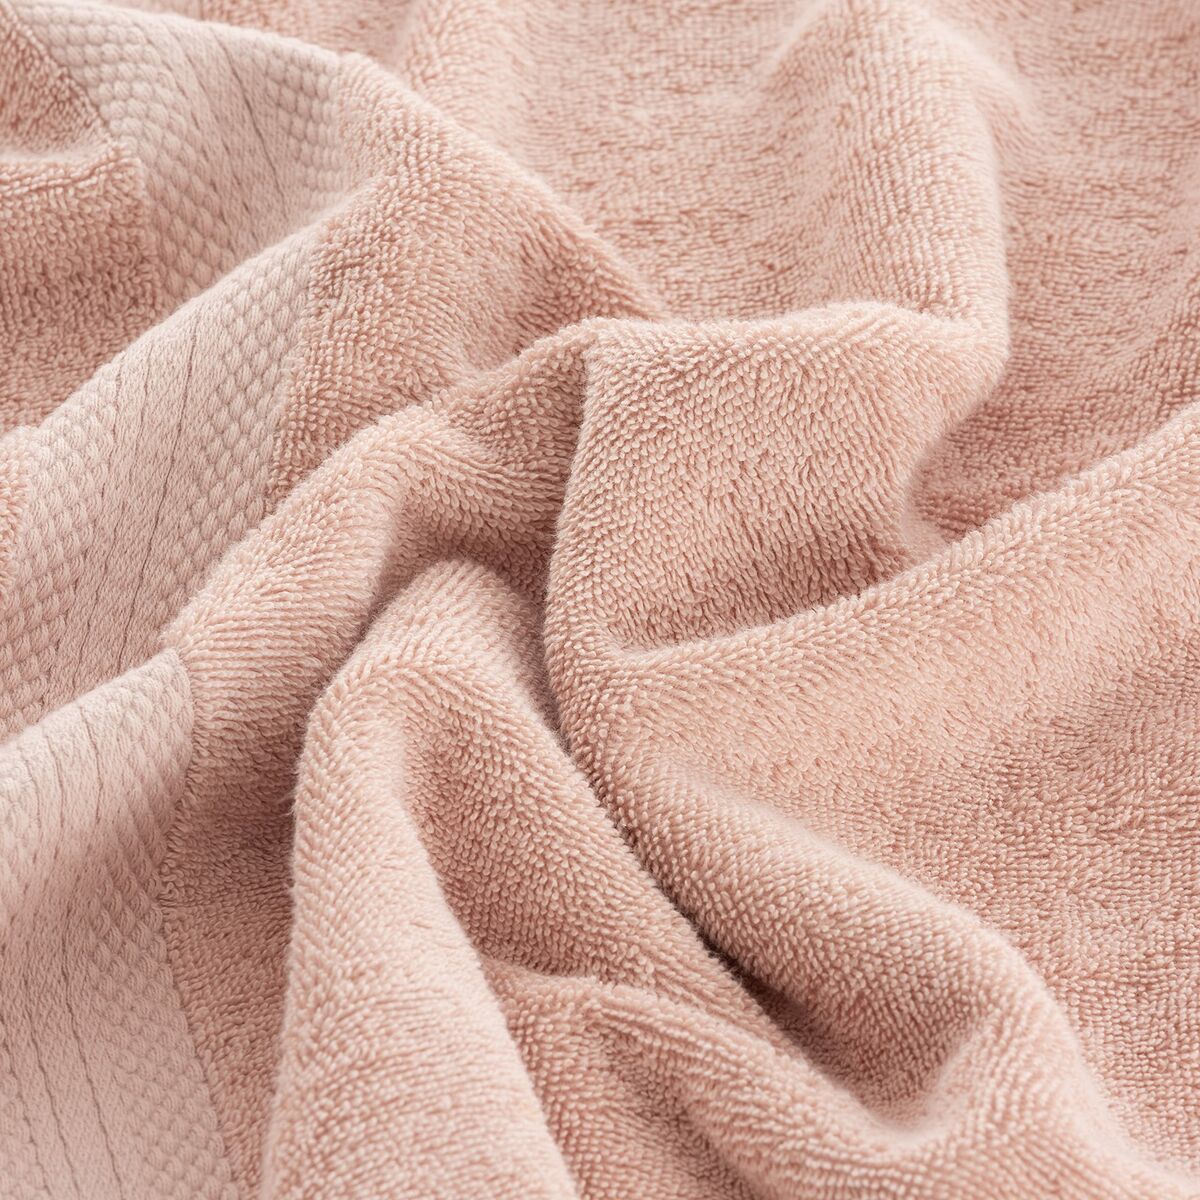 Bath towel SG Hogar Light Pink 50x100 cm - 2 pieces